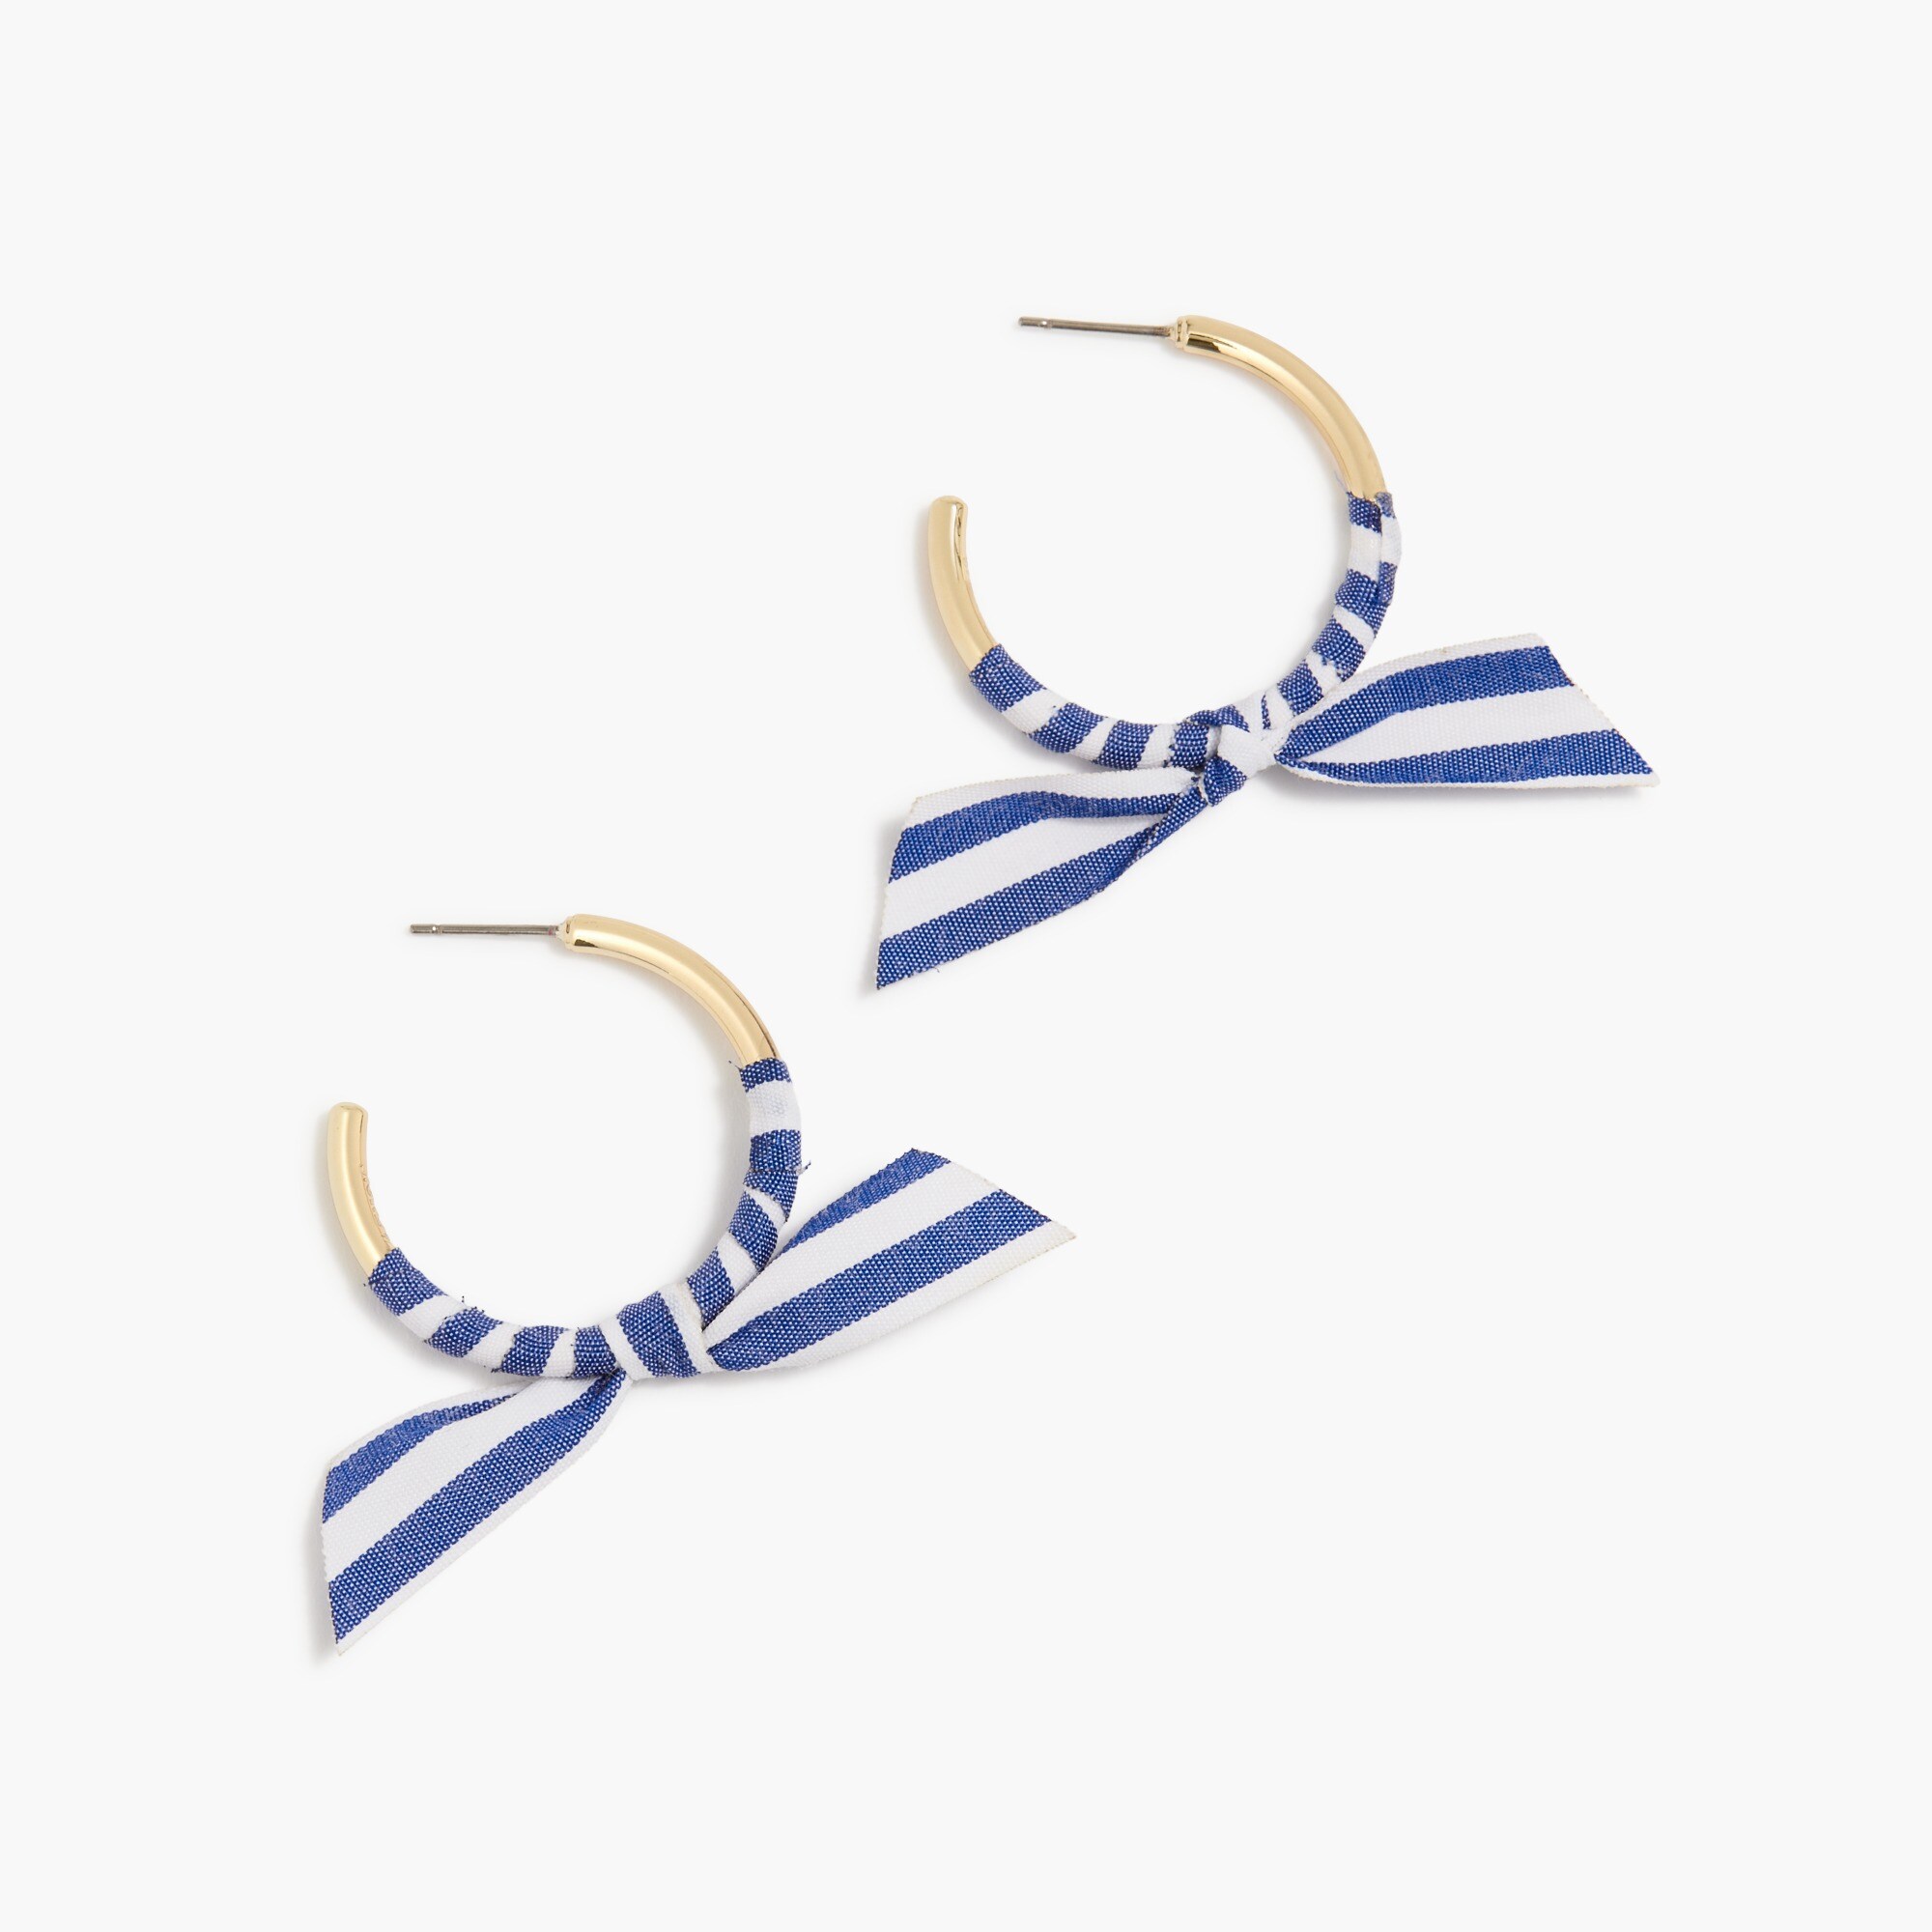  Ribbon-wrapped hoop earrings